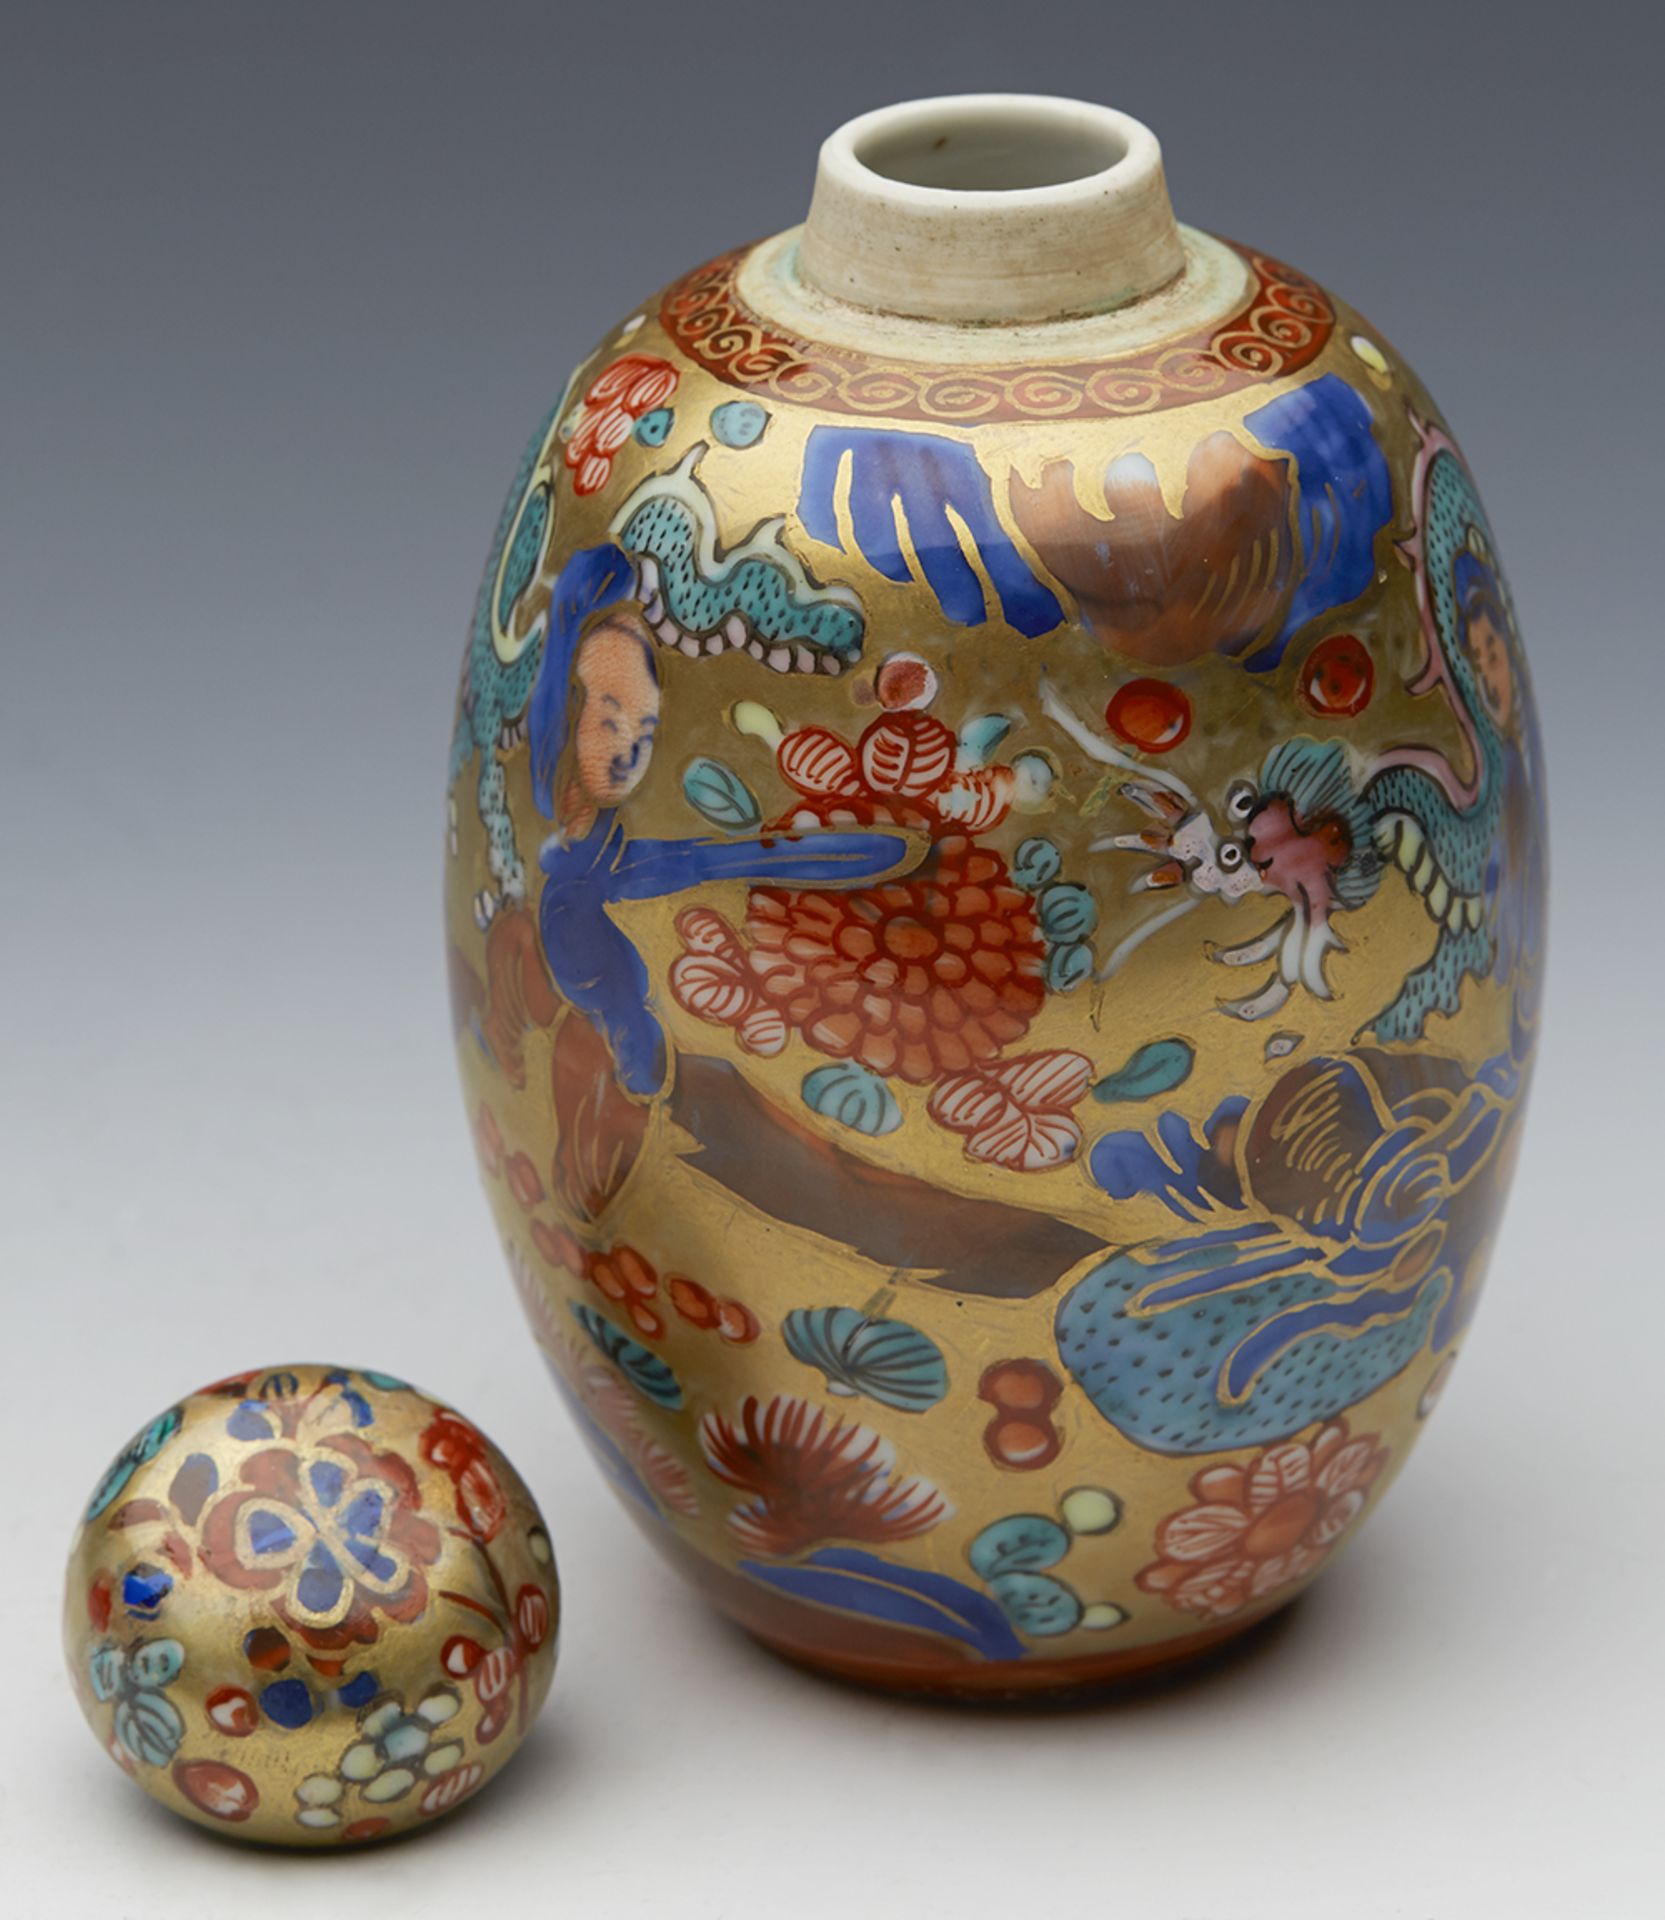 Antique Kangxi Chinese Lidded Jar C.1662 - 1722 - Image 6 of 13